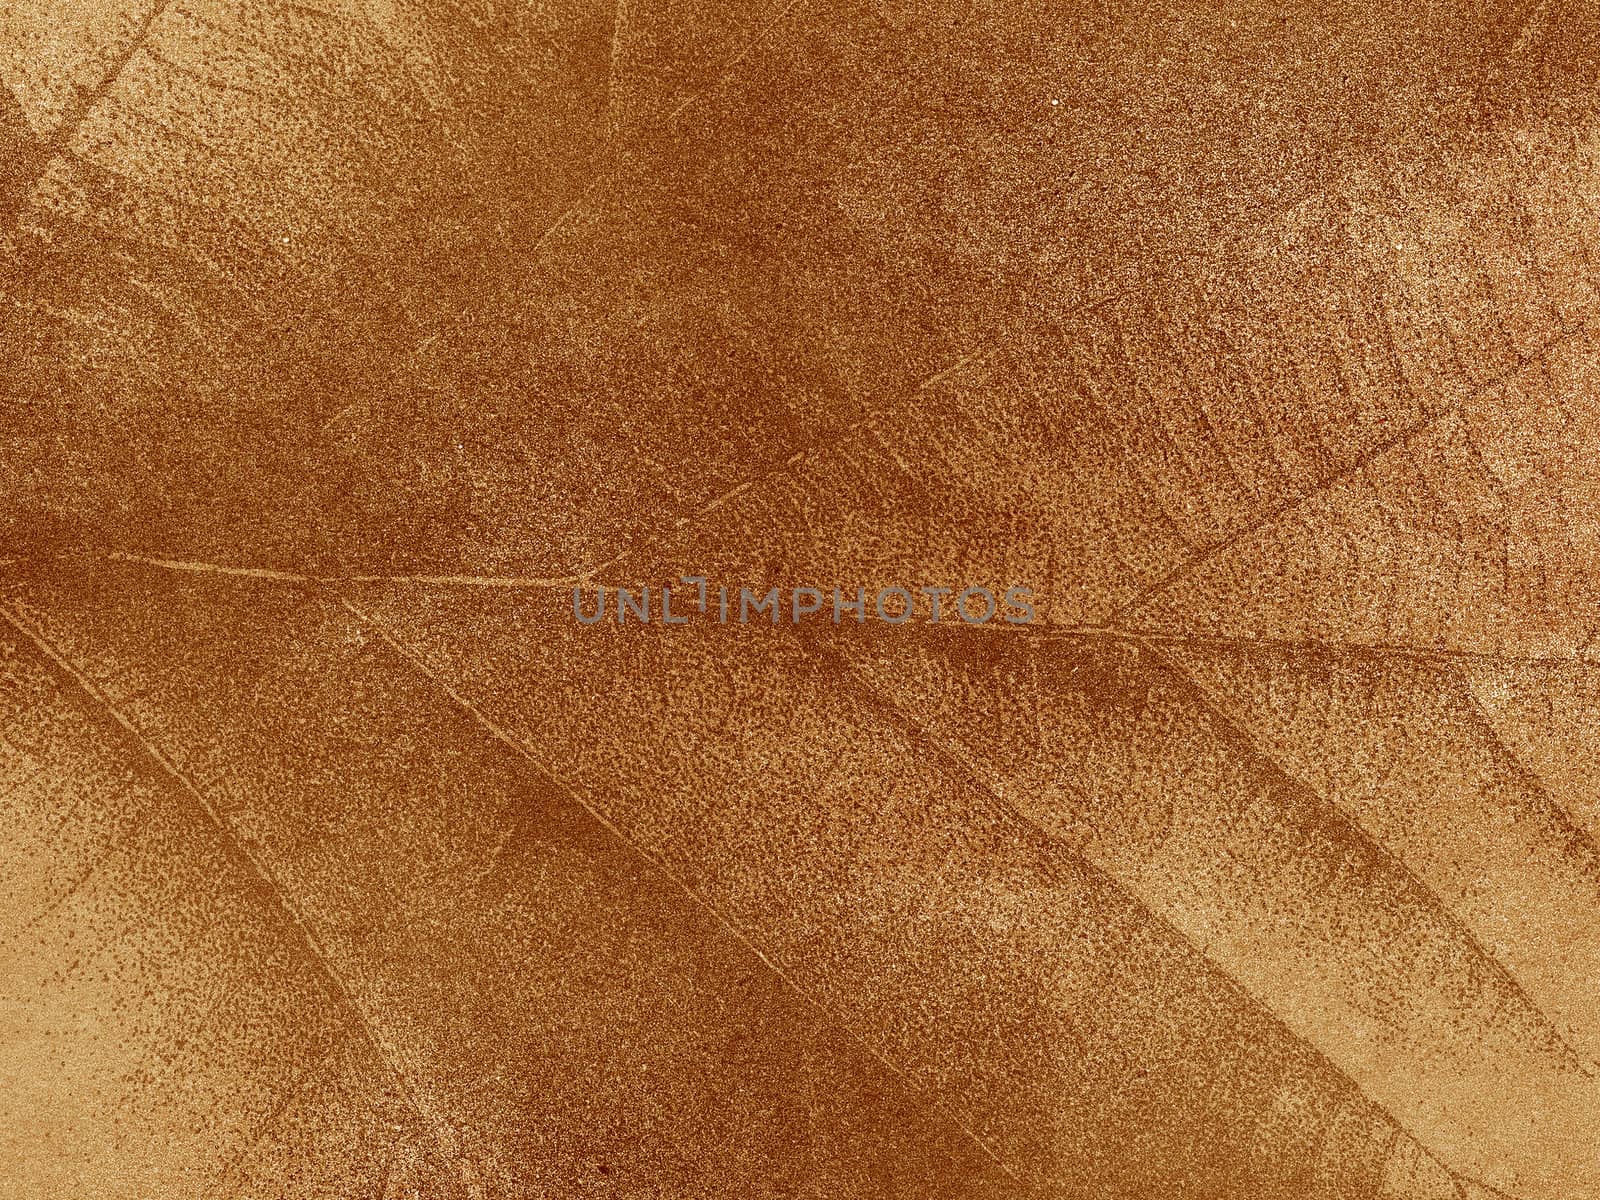 Dry leaf textured on grunge paper background by jakgree